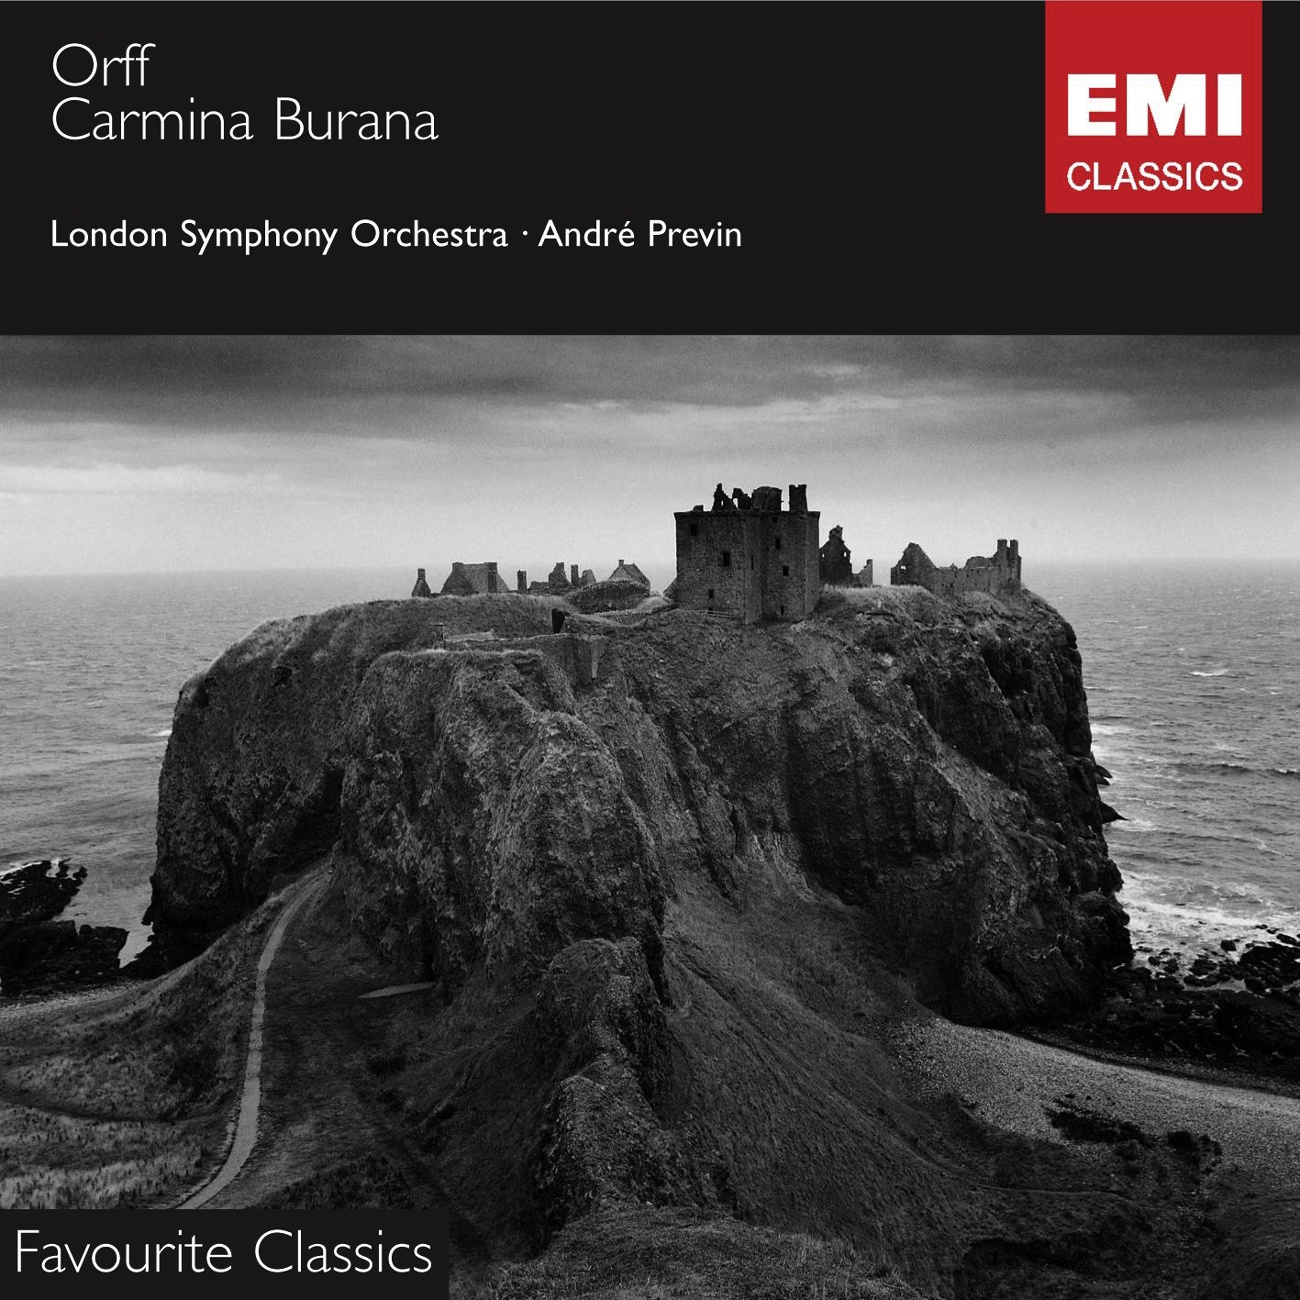 Carmina Burana - Cantiones profanae (1997 Digital Remaster), I - Primo vere: No. 4 - Omnia Sol temperat